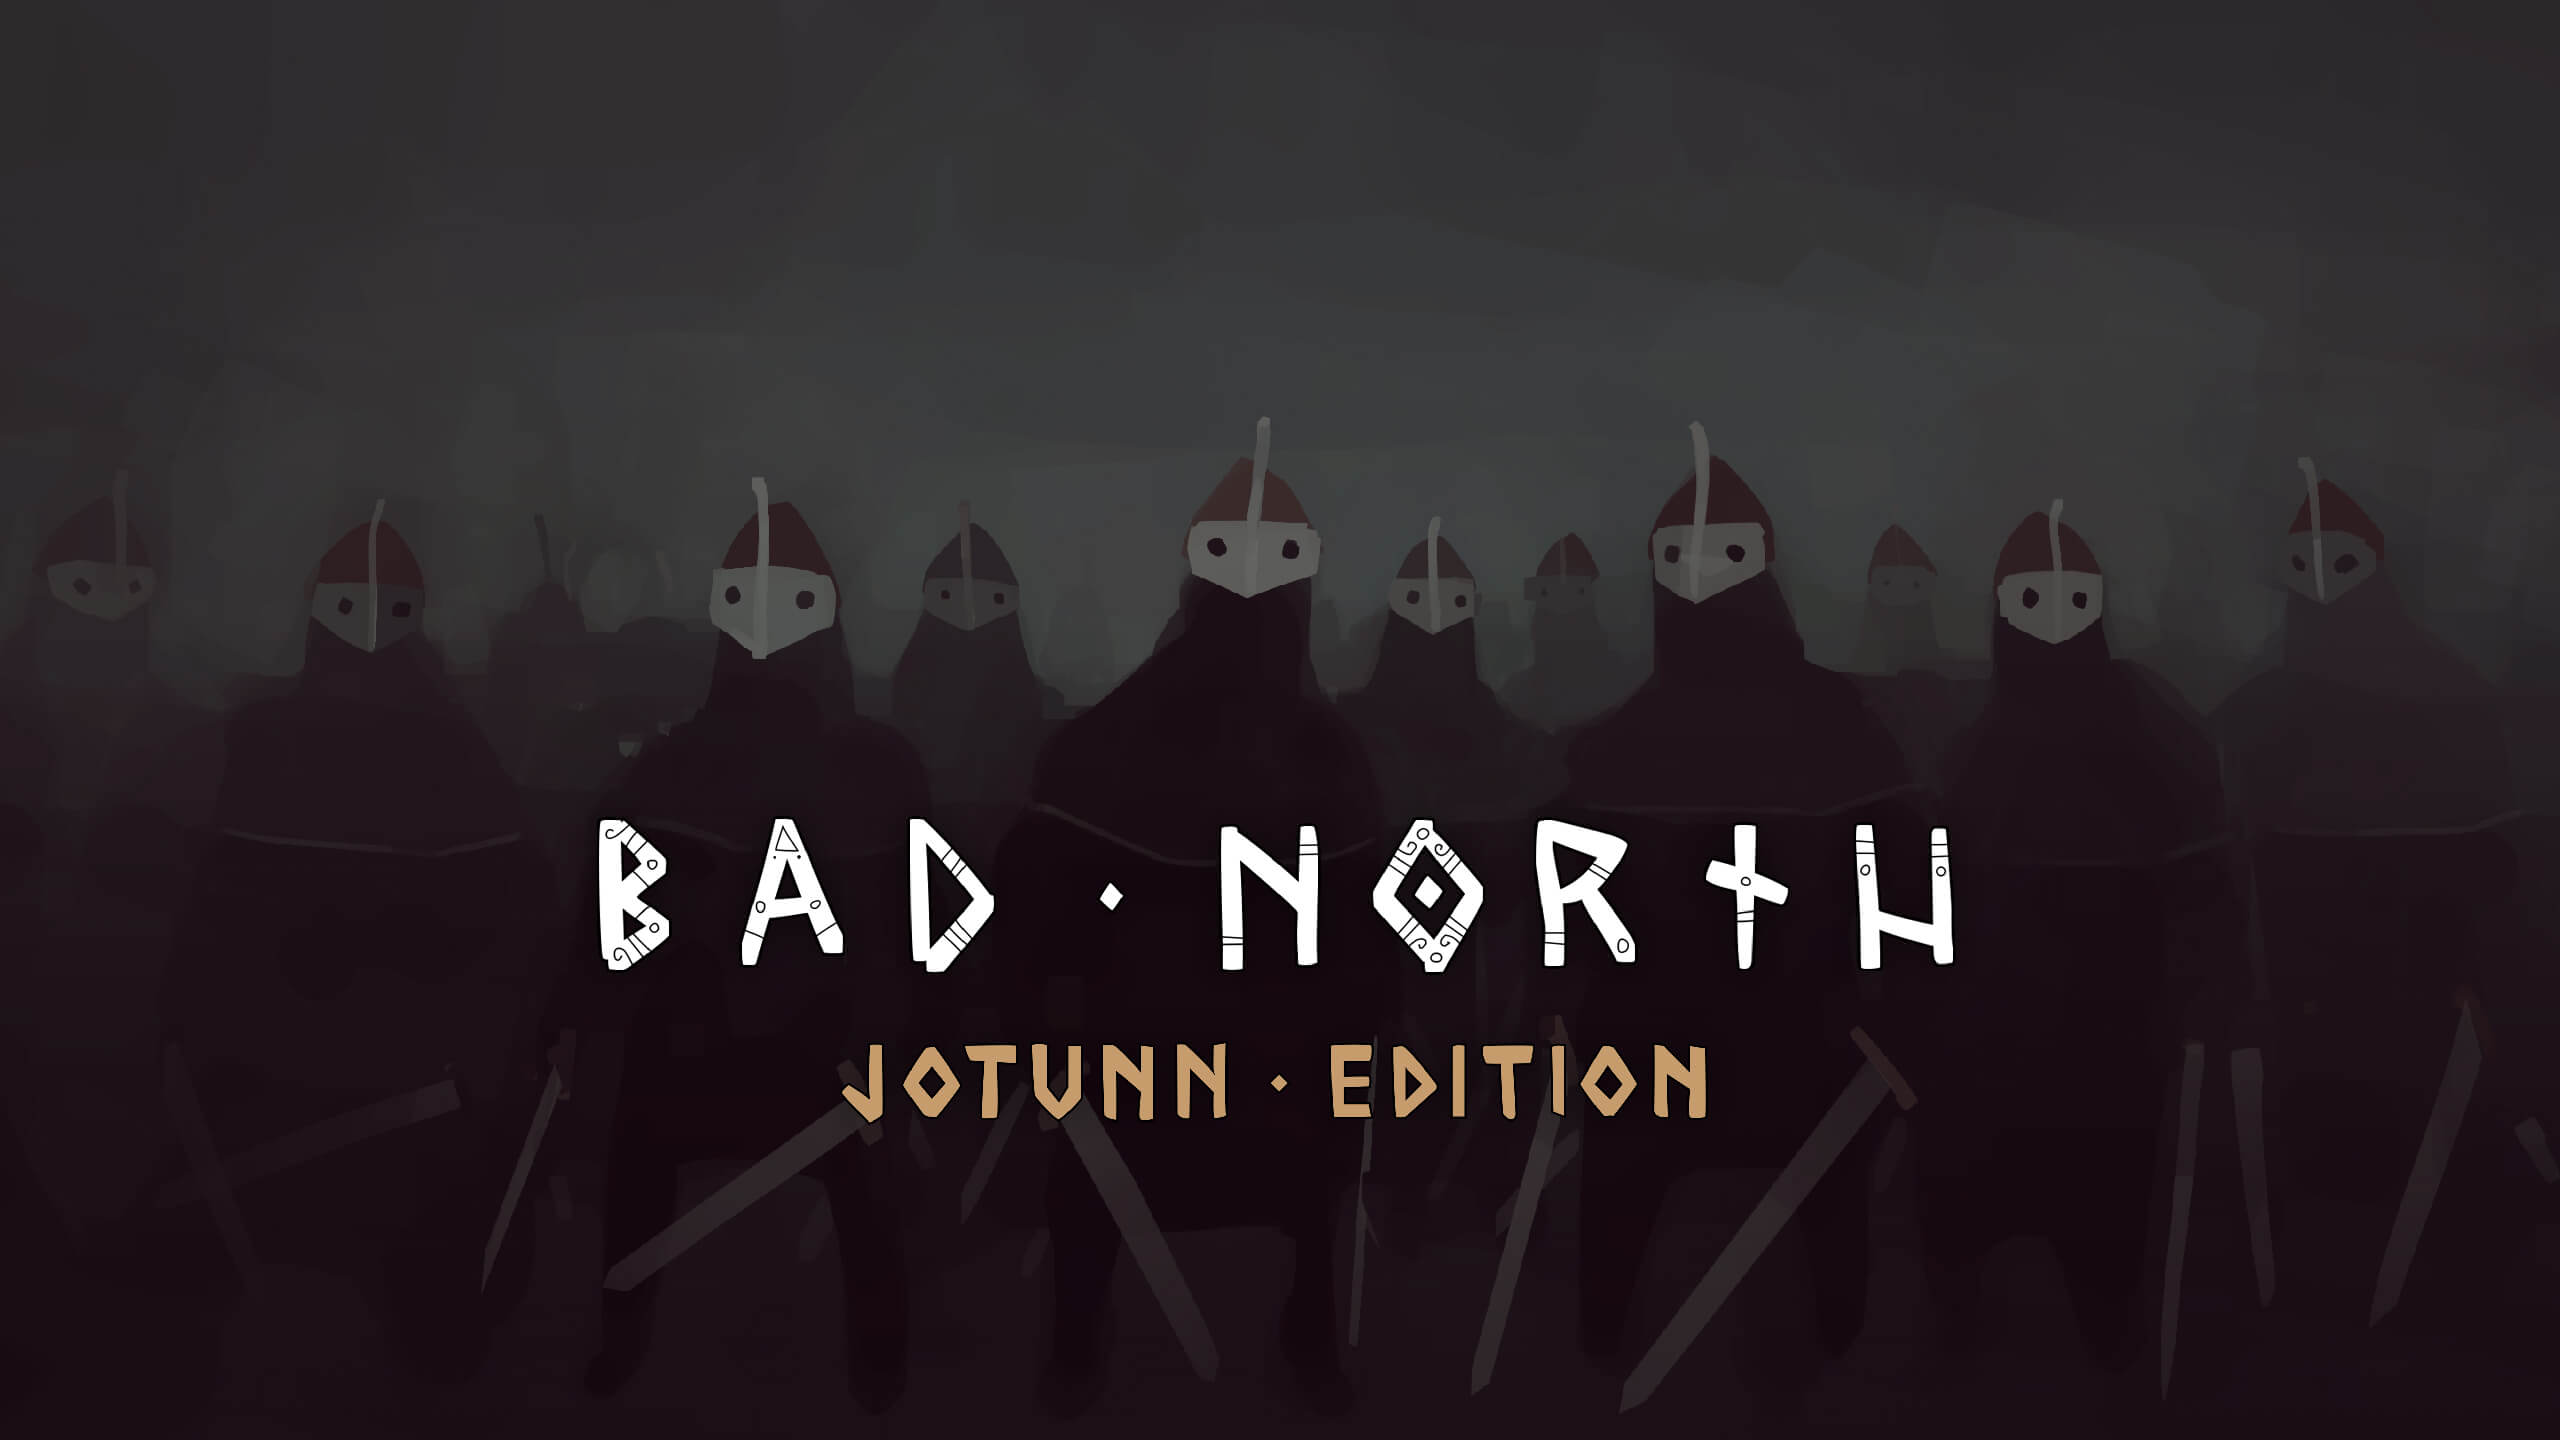 jaquette du jeu vidéo Bad North Jotunn Edition